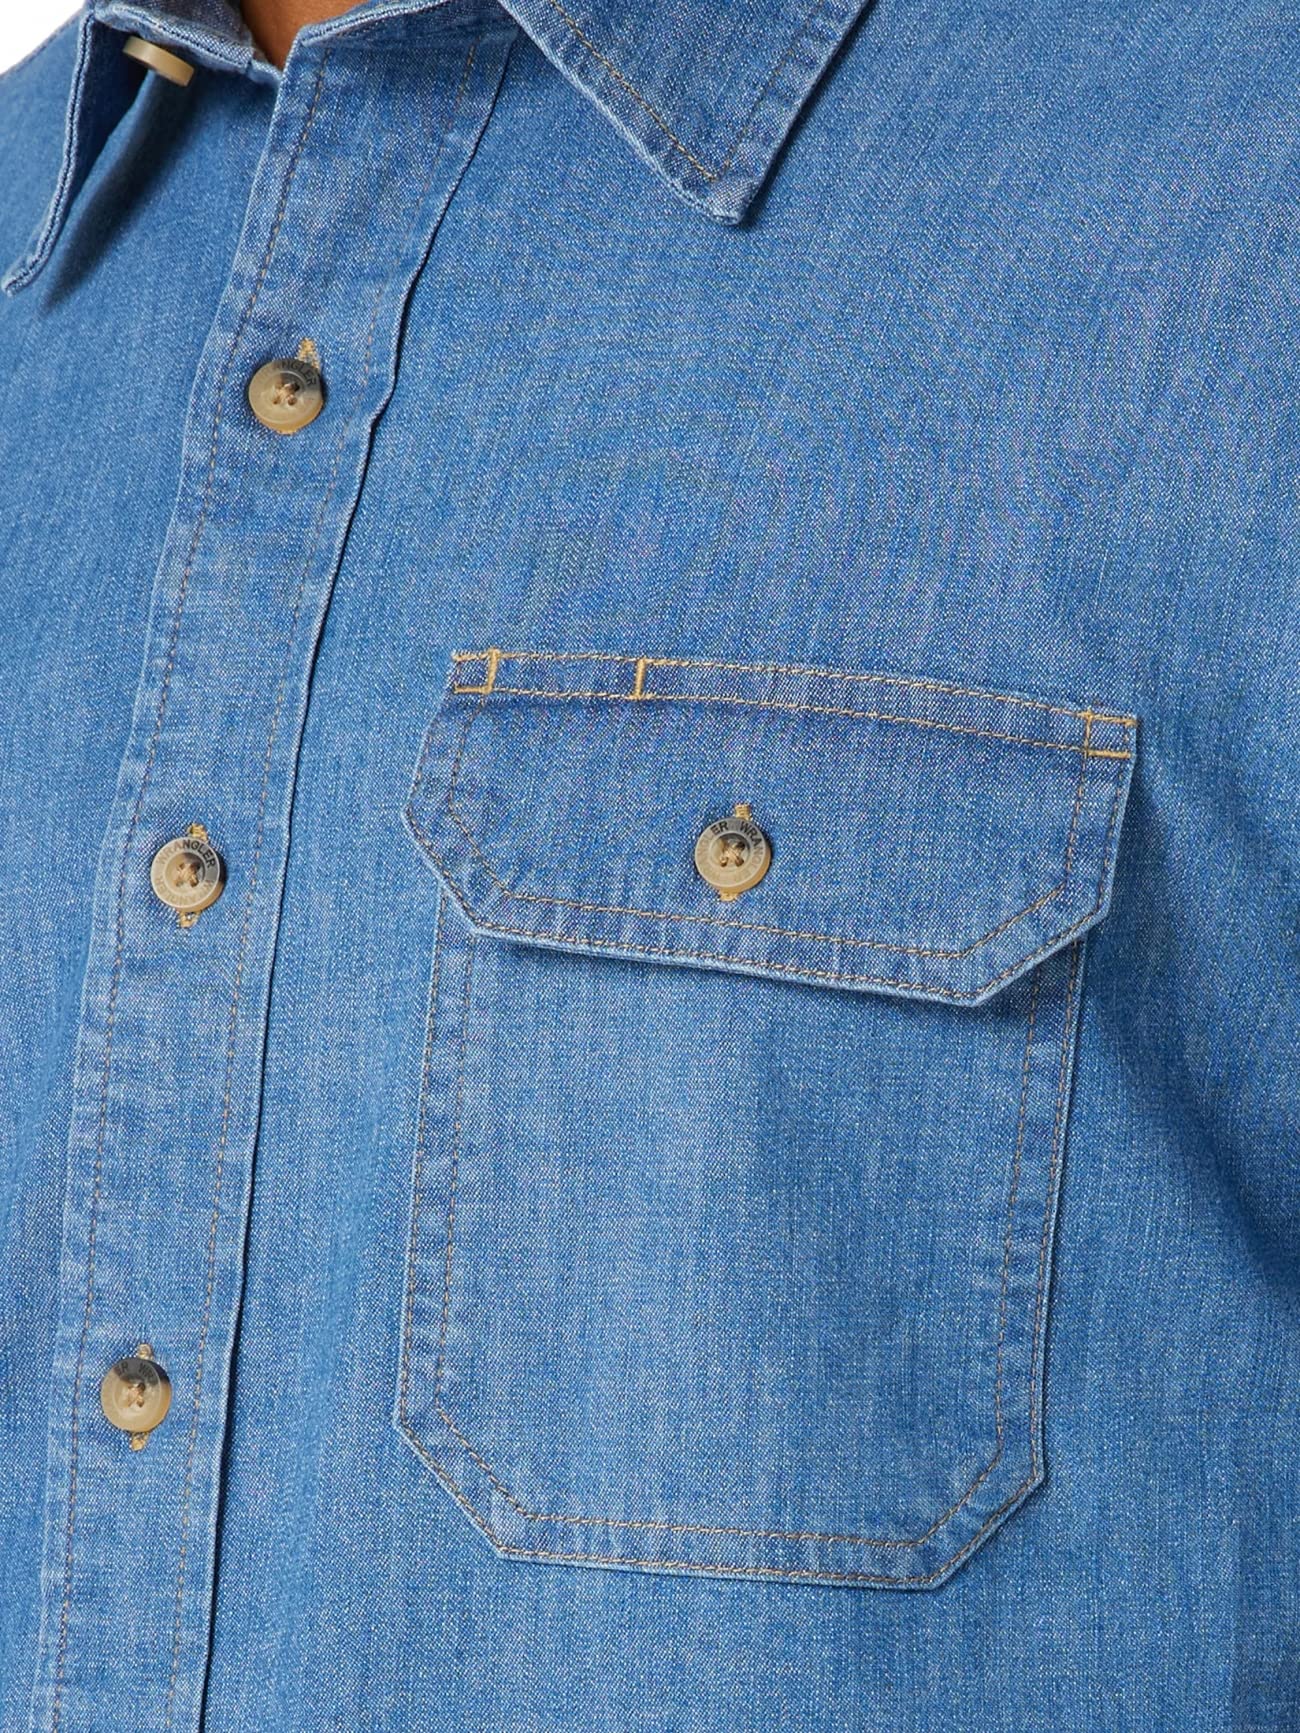 Wrangler Authentics mens Short Sleeve Classic Woven Button Down Shirt, Mid Wash, Medium US